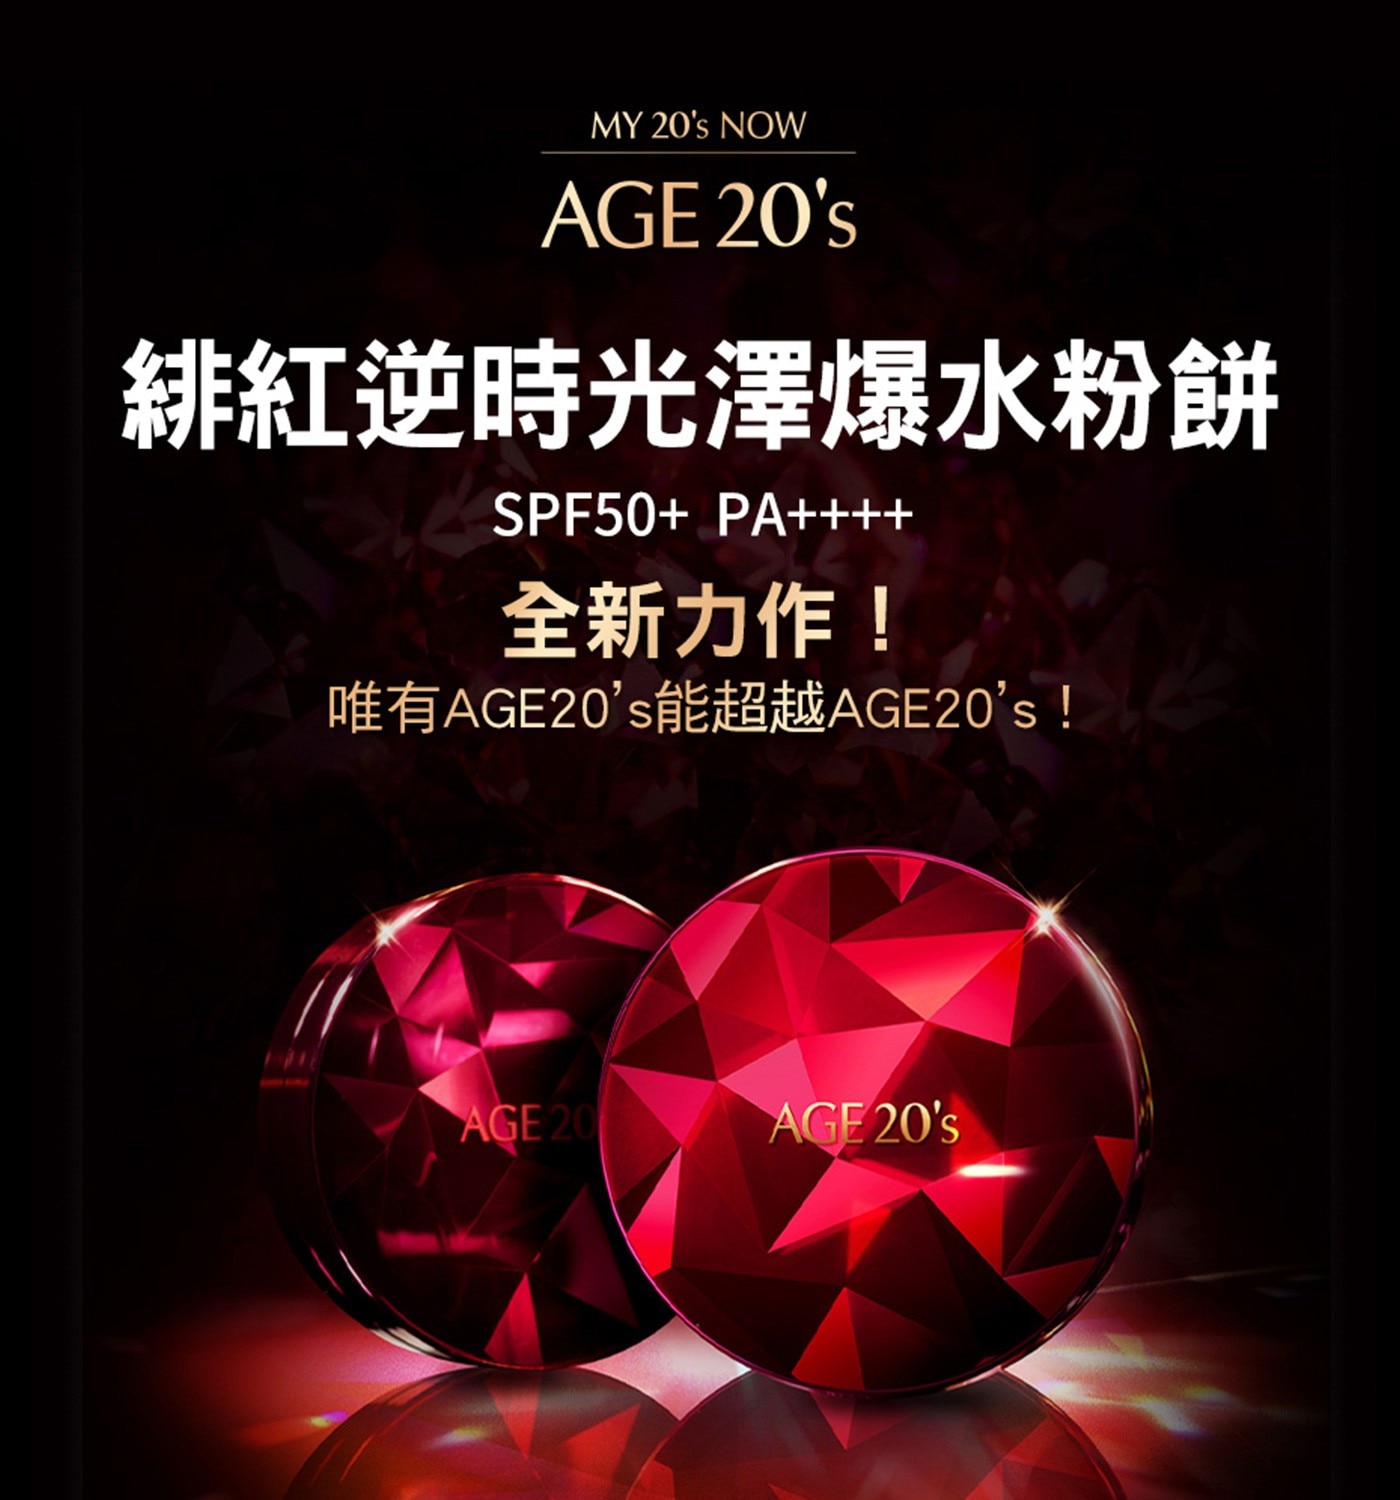 AGE20’s 緋紅逆時光澤爆水粉餅SPF50+/PA++++ (BE-21)亮白色,全新力作!唯有AGE20's能超越AGE20's